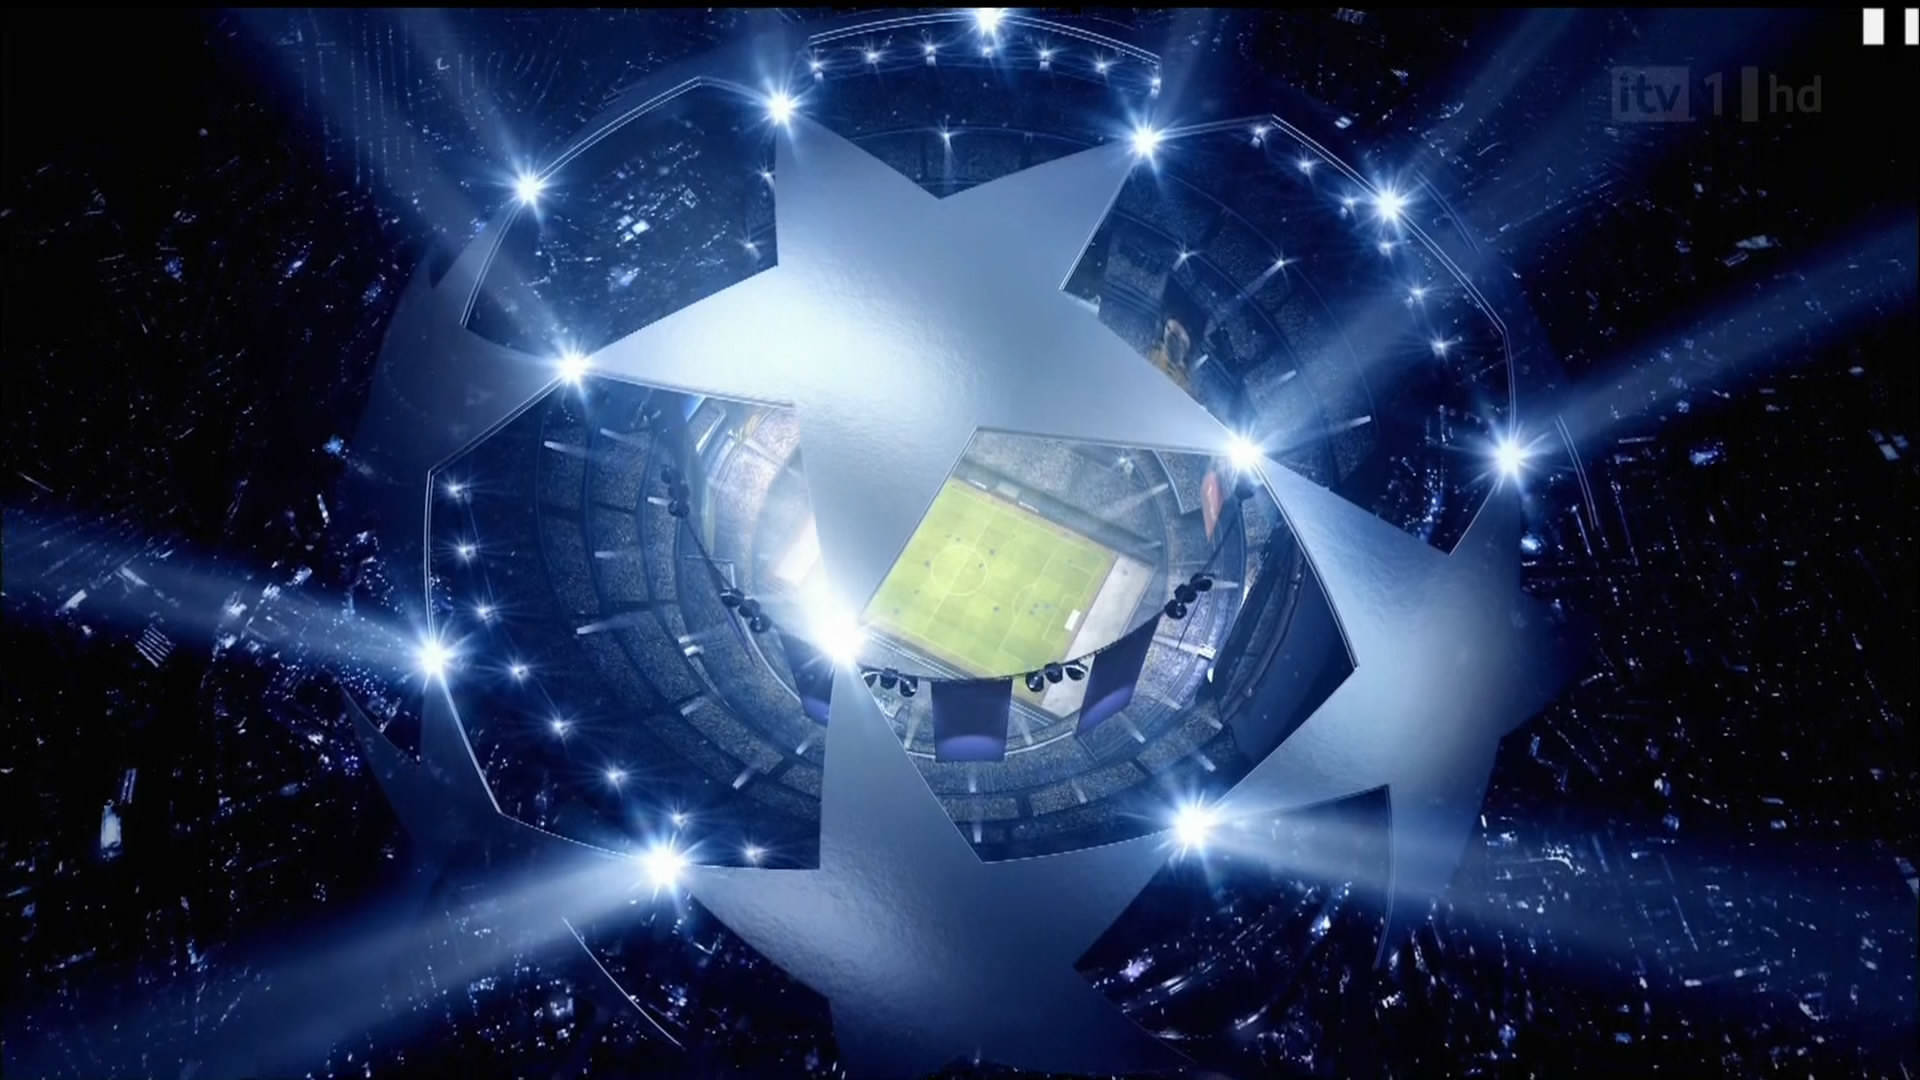 1. Luftfoto Champions League Star Arena Wallpaper